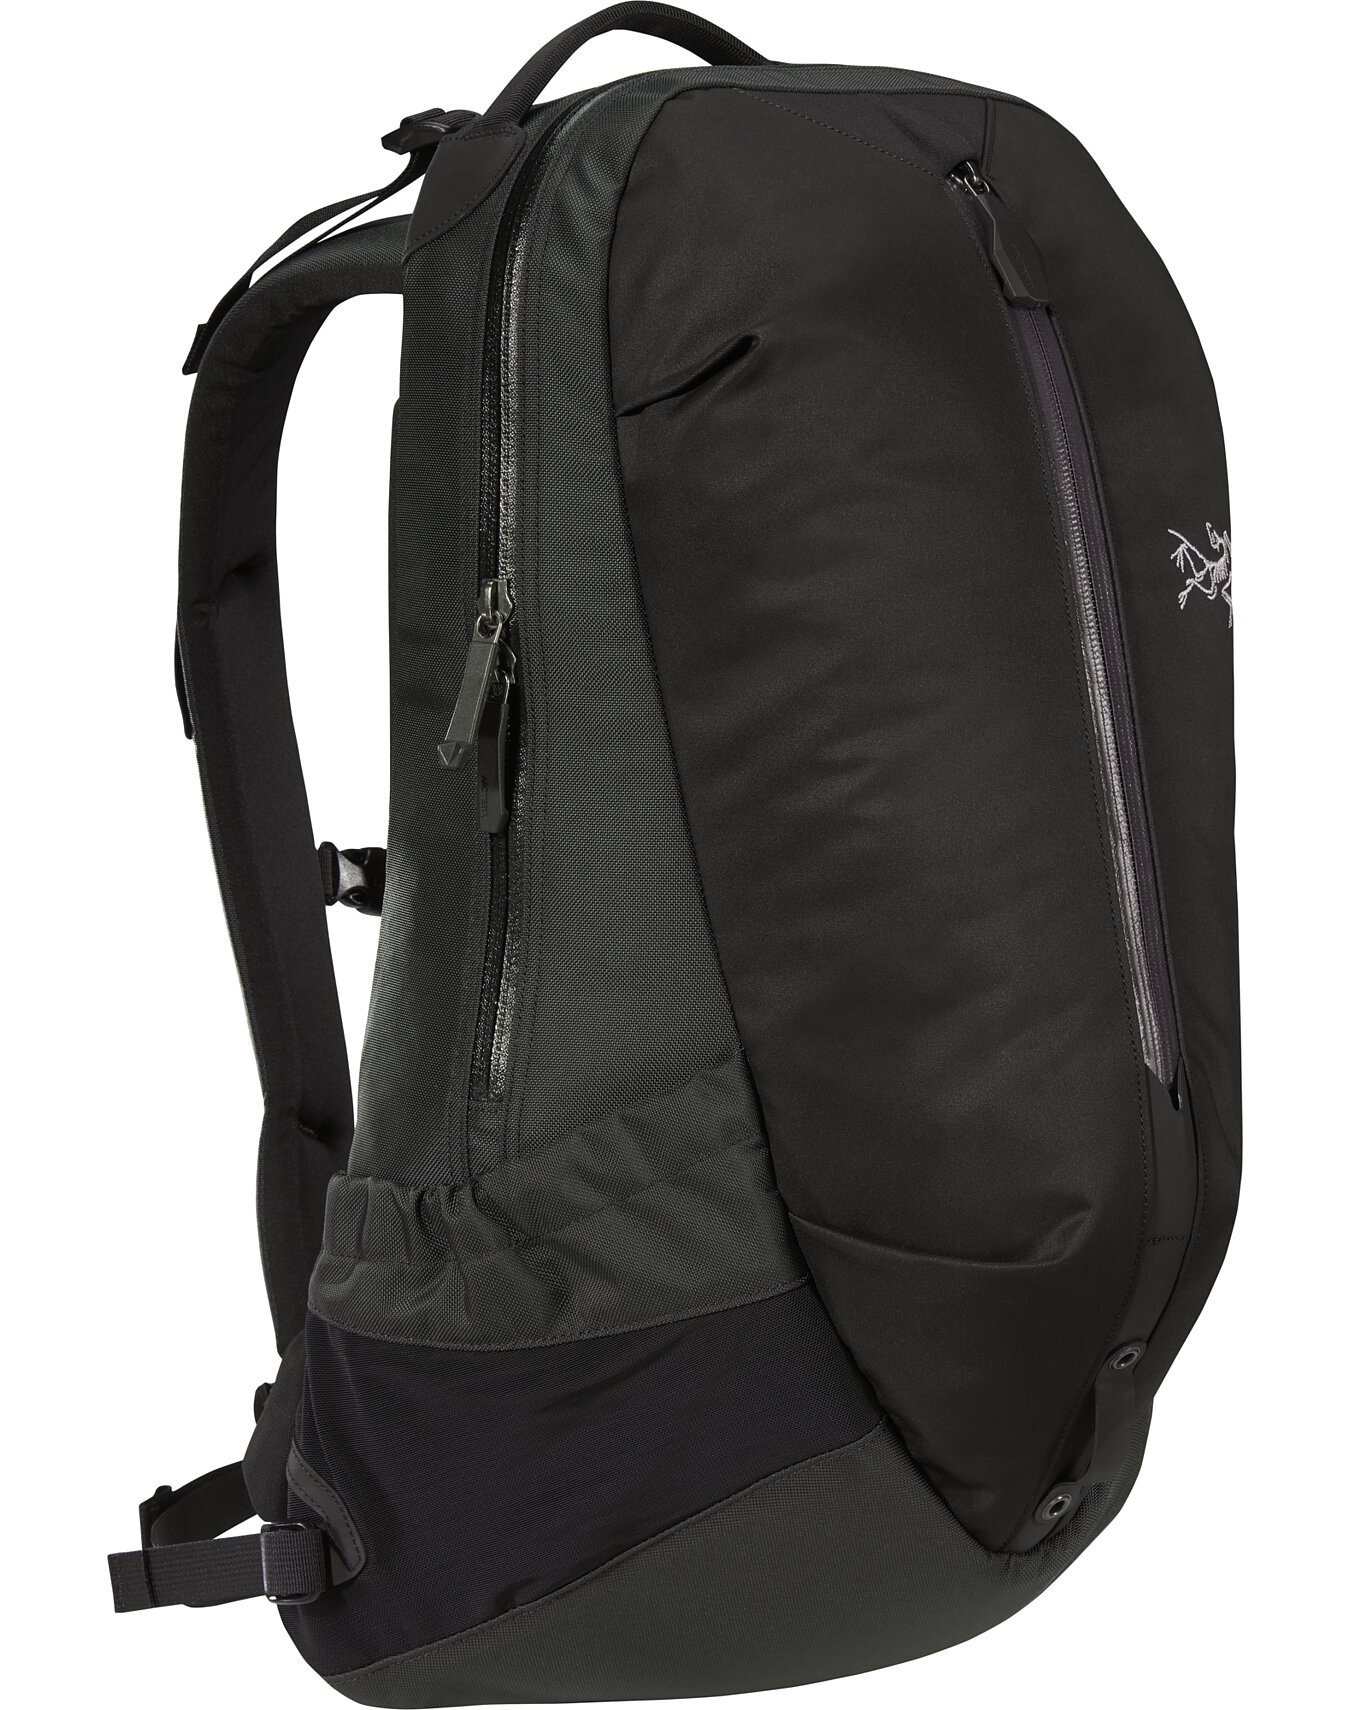 Arc'teryx / Arro 22 Backpack